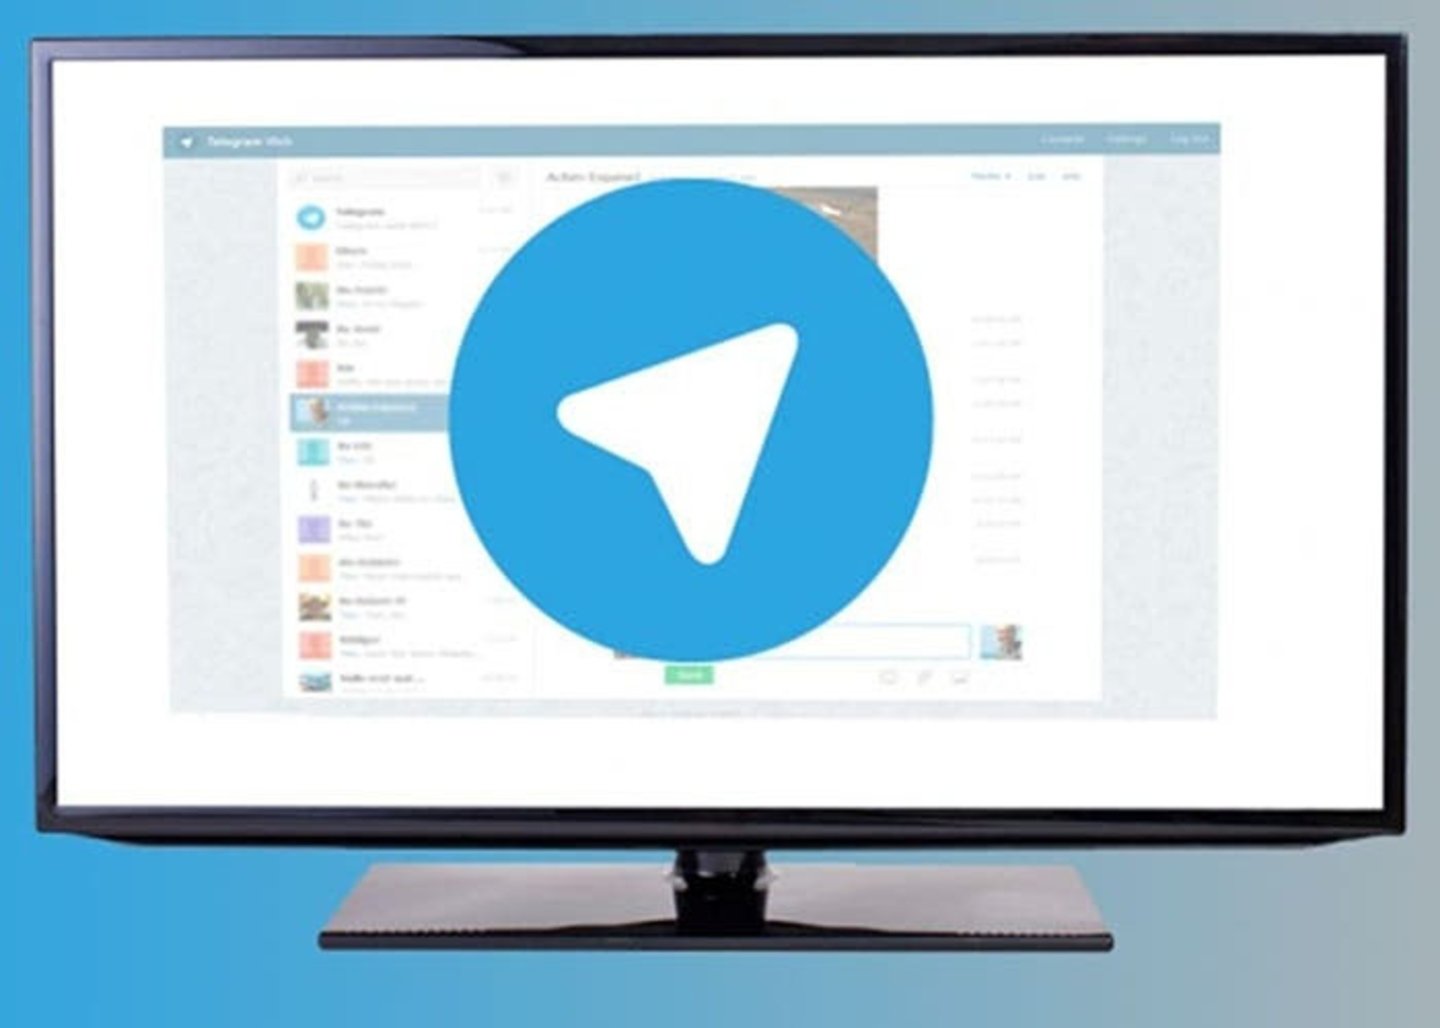 Cerrar y minimizar Telegram Desktop en segundos